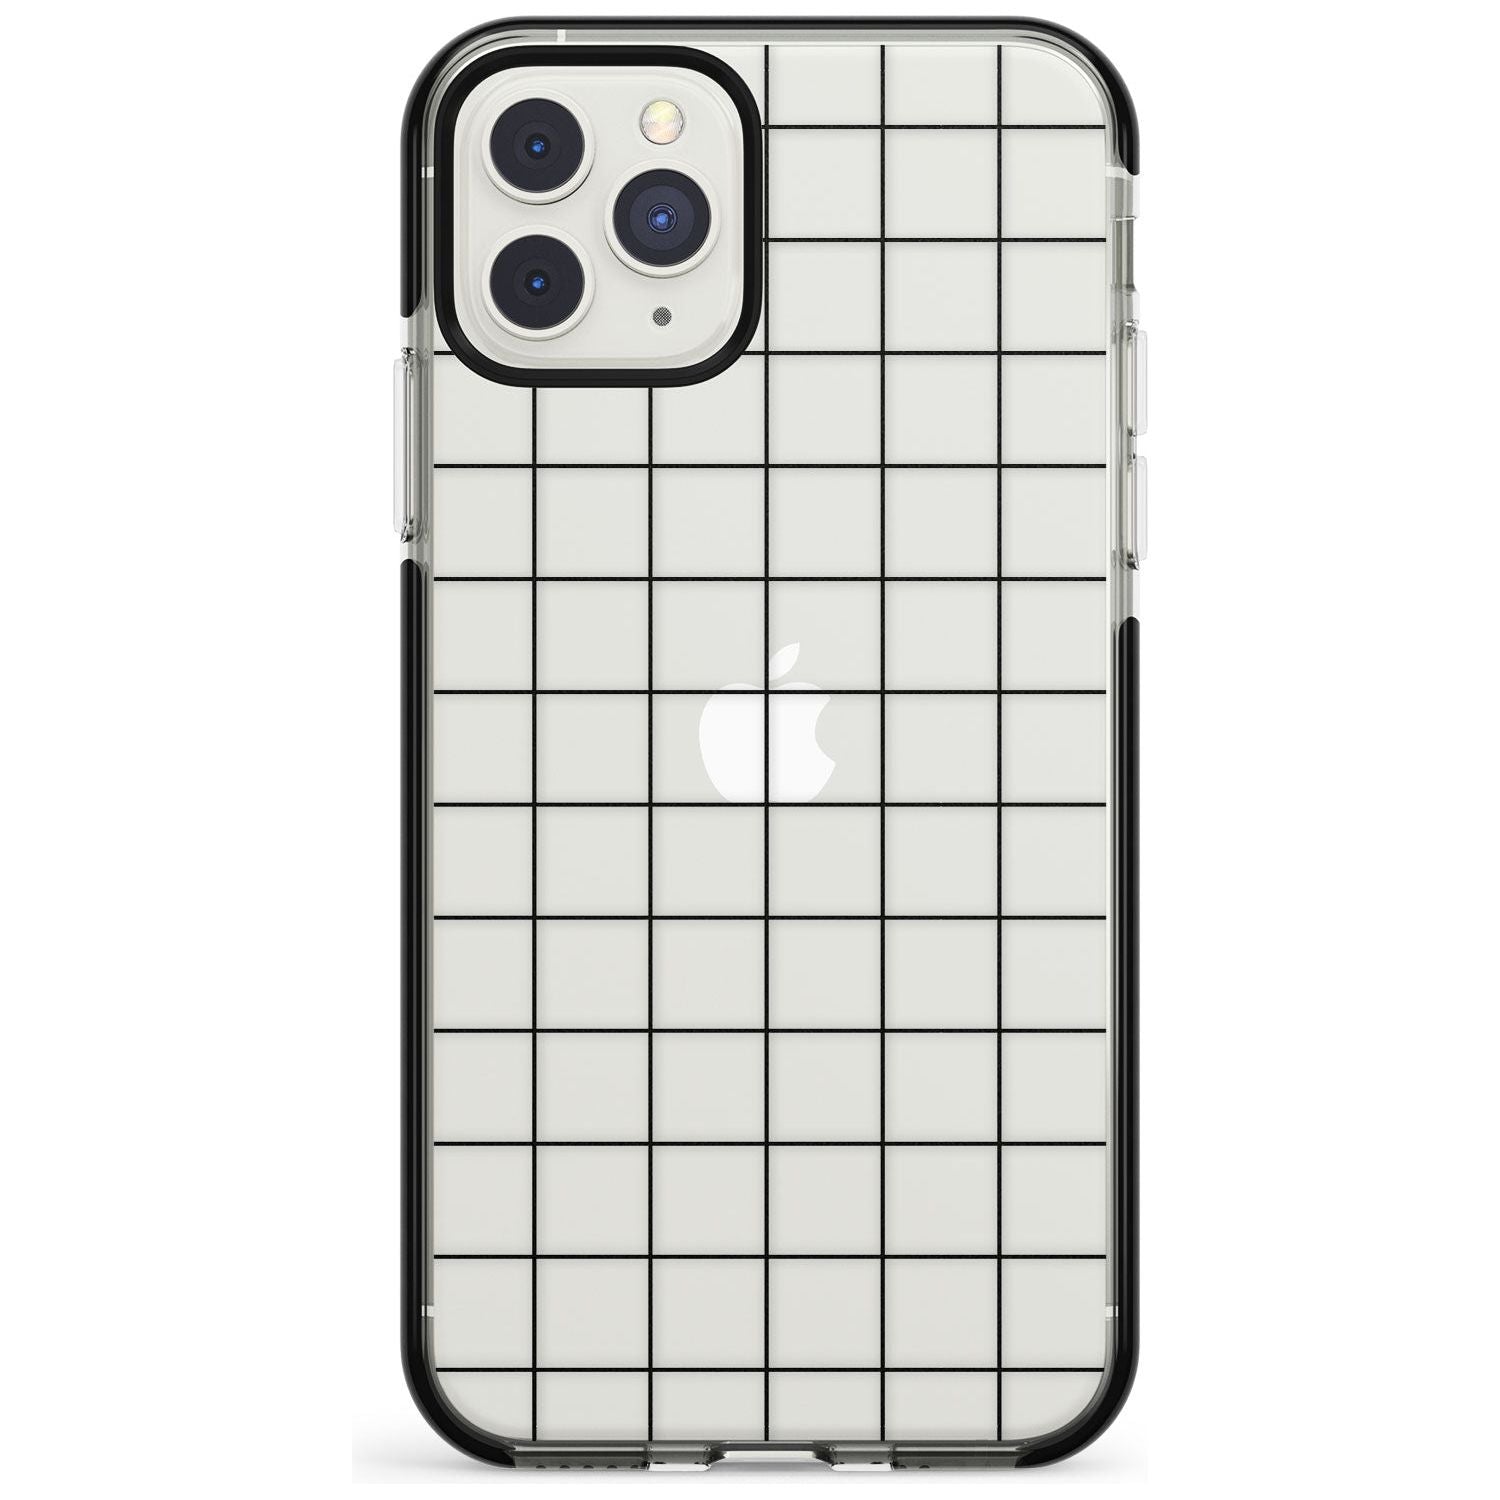 Simplistic Large Grid Pattern Black (Transparent) Black Impact Phone Case for iPhone 11 Pro Max